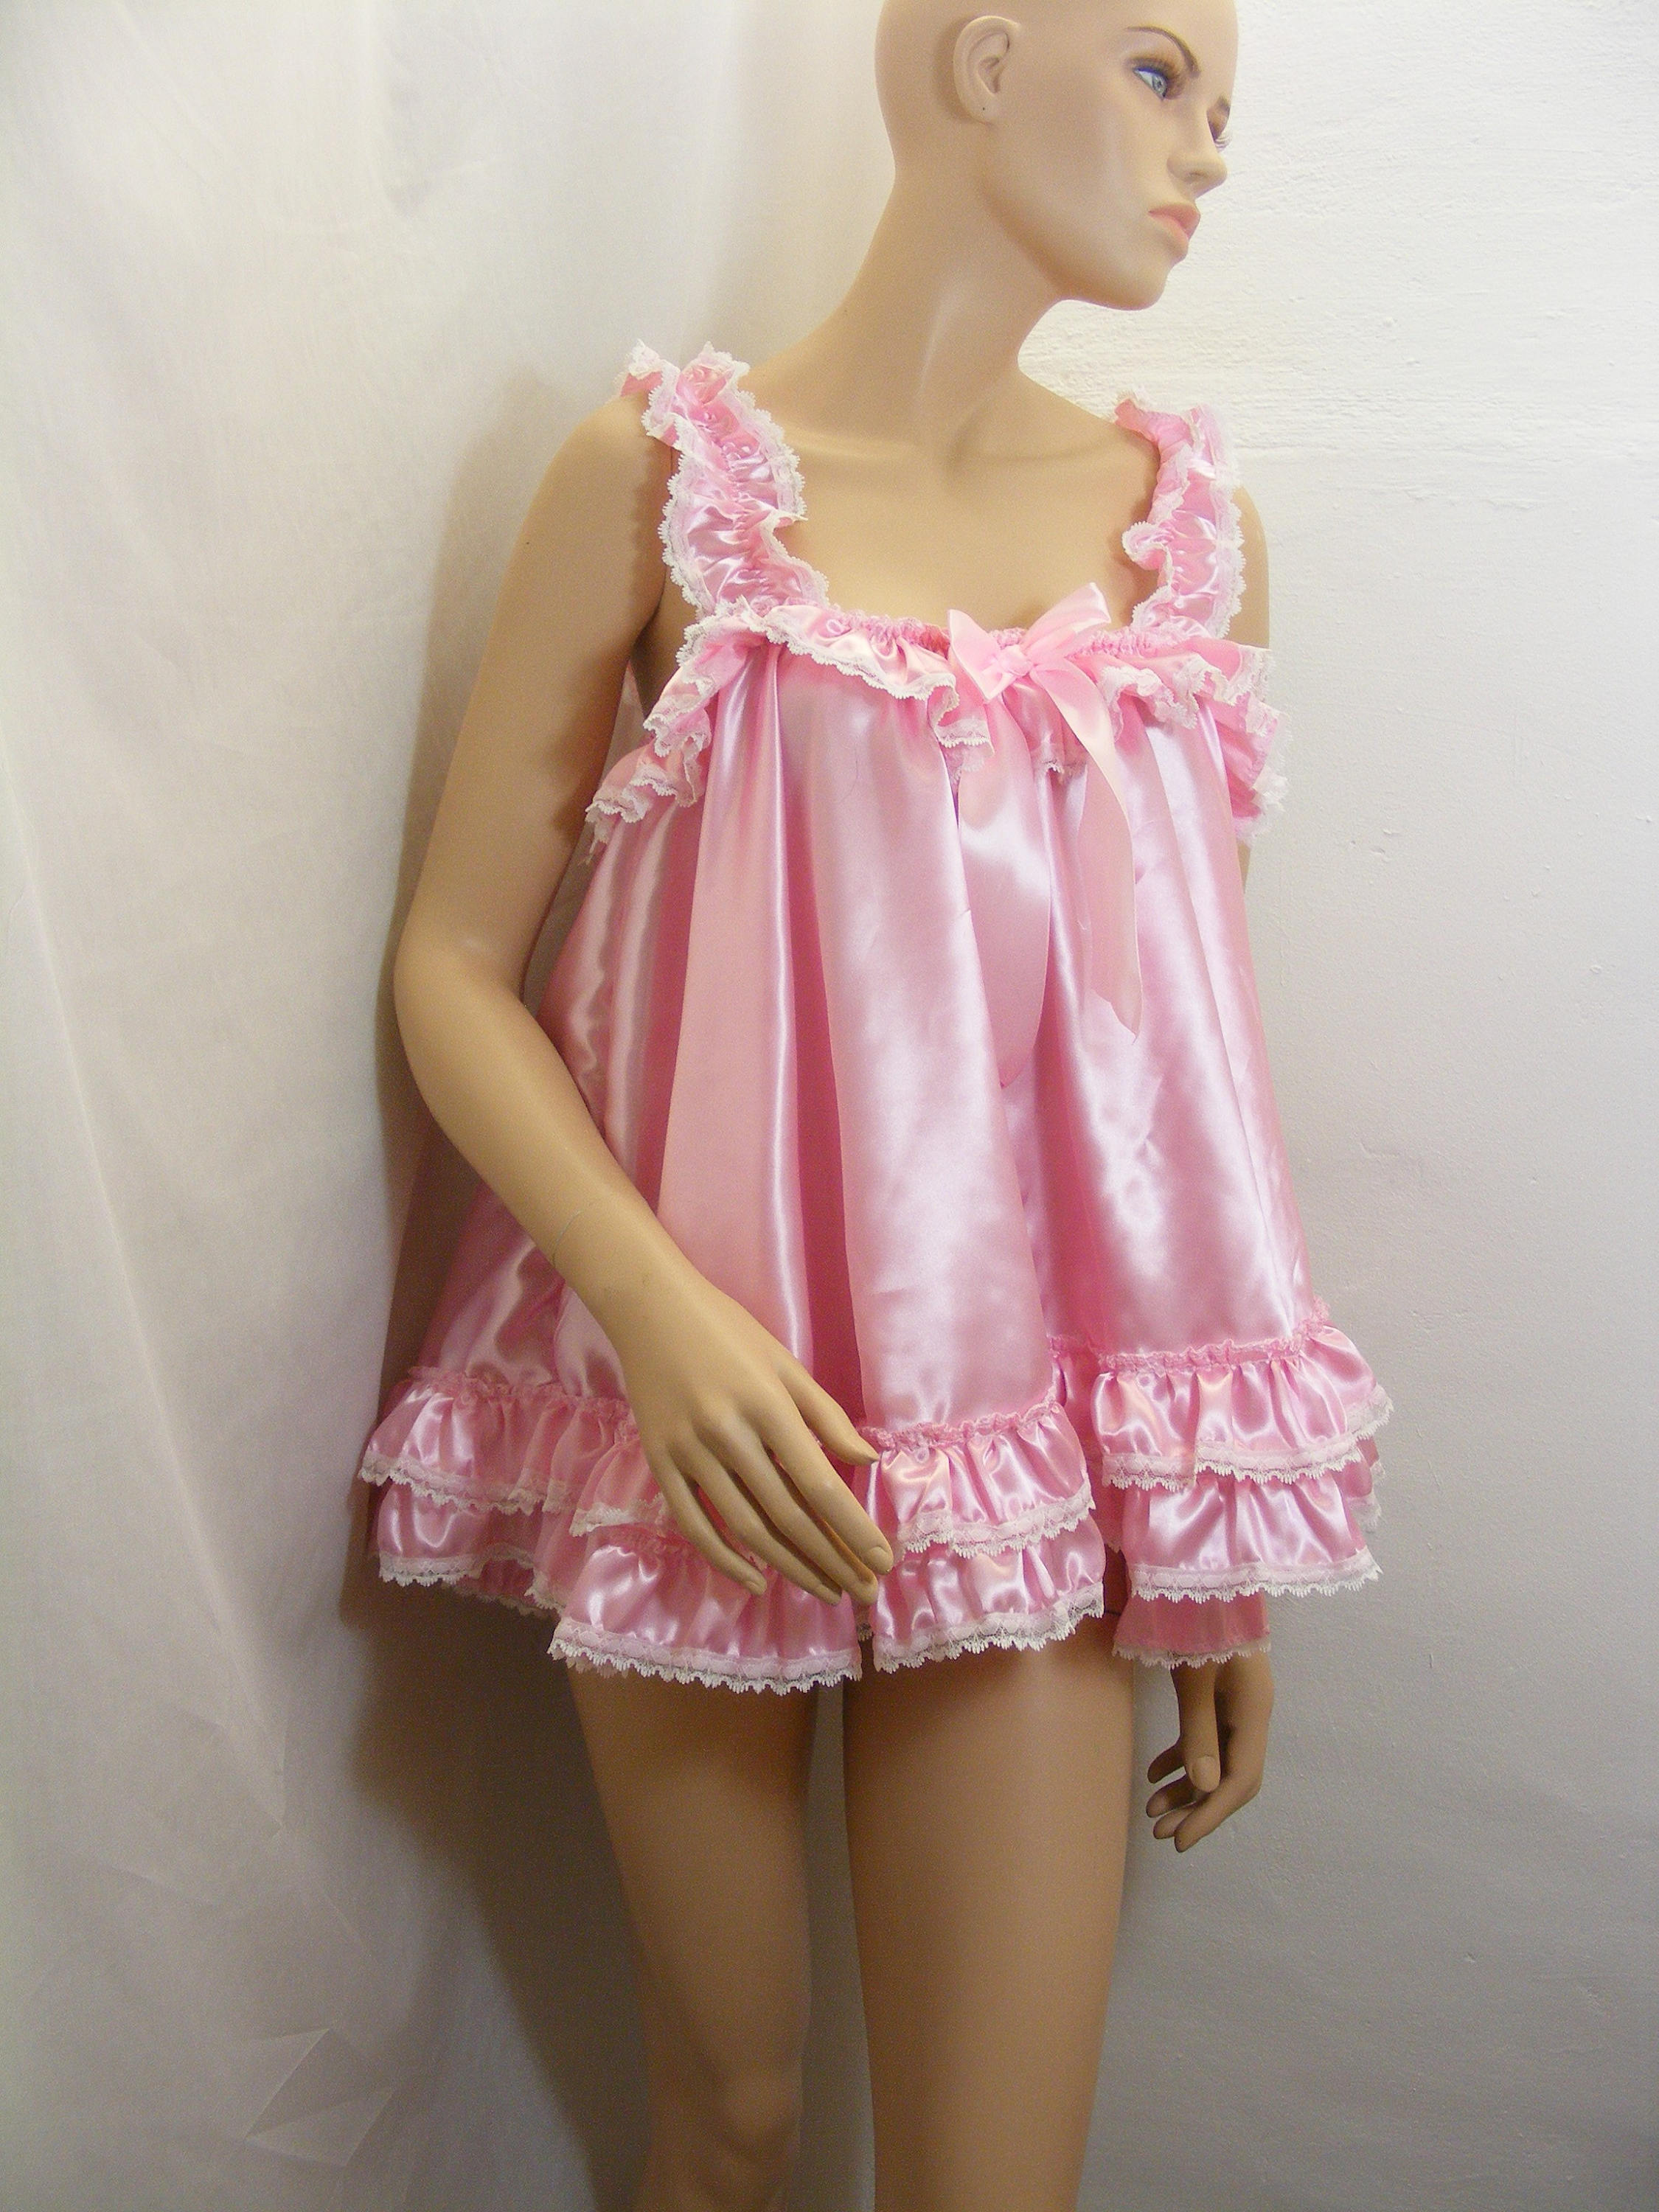 Sissy Satin Baby Doll Nightie Negligee Dress Top Cosplay Fancy Etsy UK